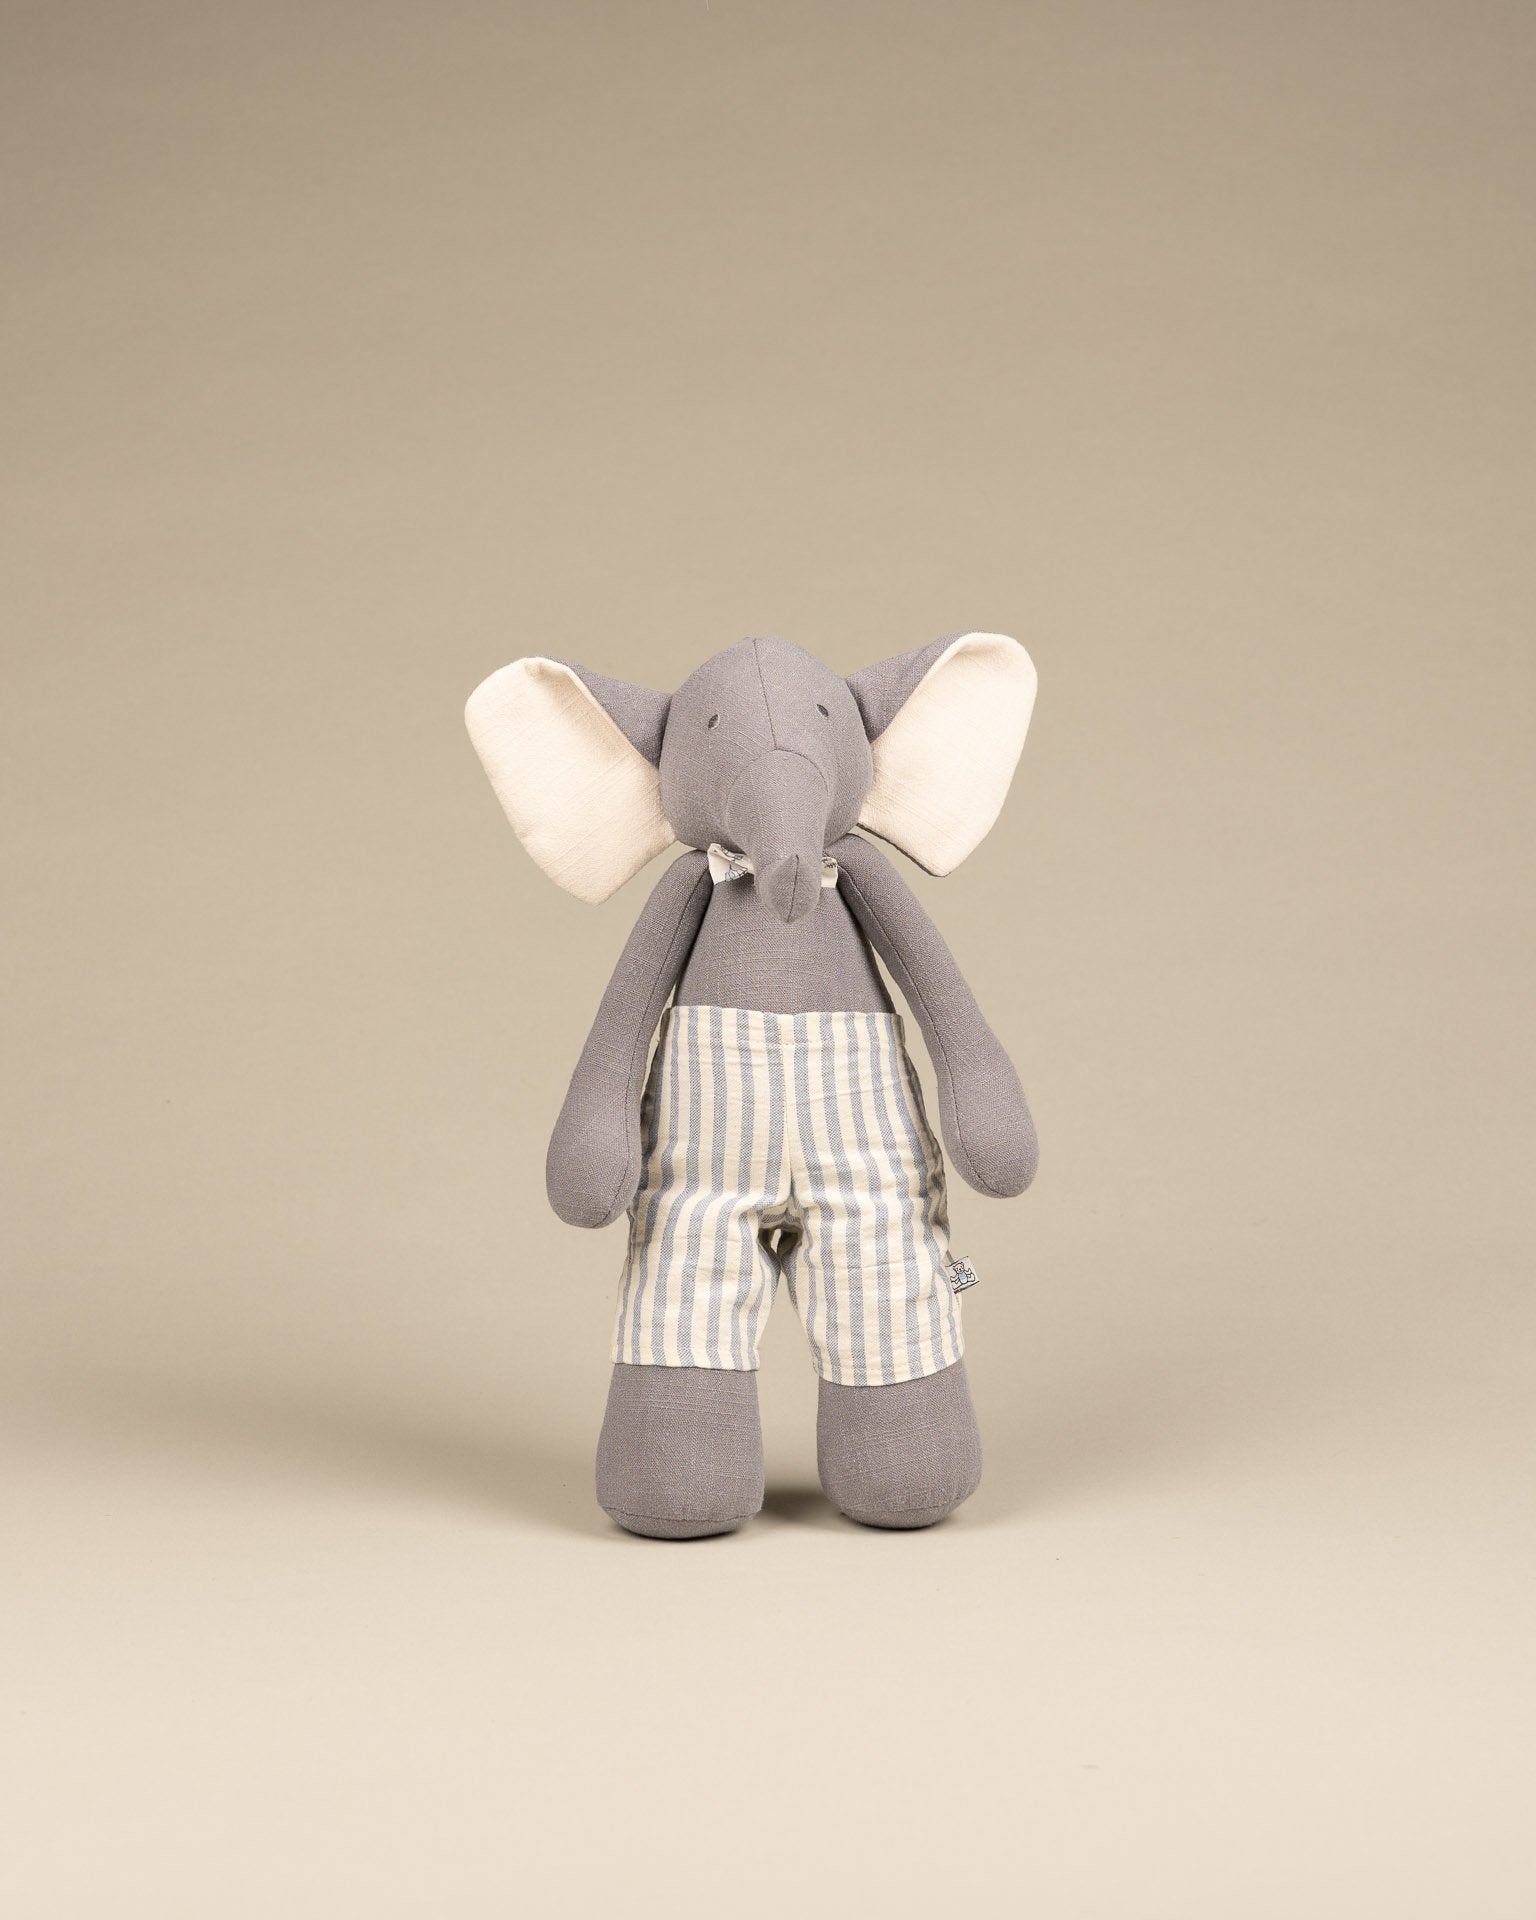 Petite peluche - Mrs. Elephant